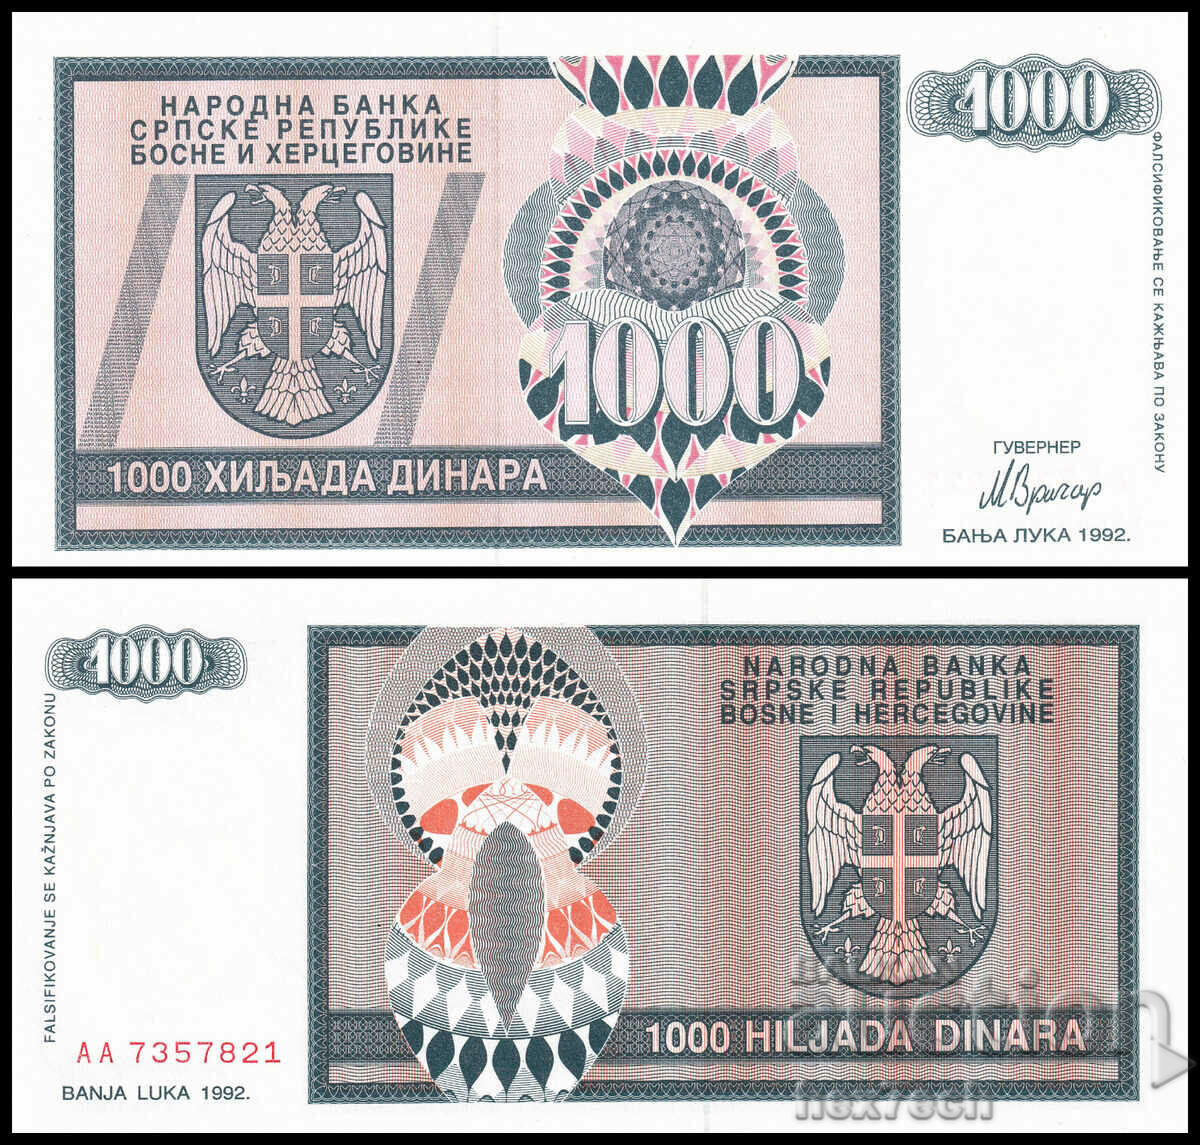 ❤️ ⭐ Bosnia and Herzegovina 1992 1000 dinars UNC new ⭐ ❤️